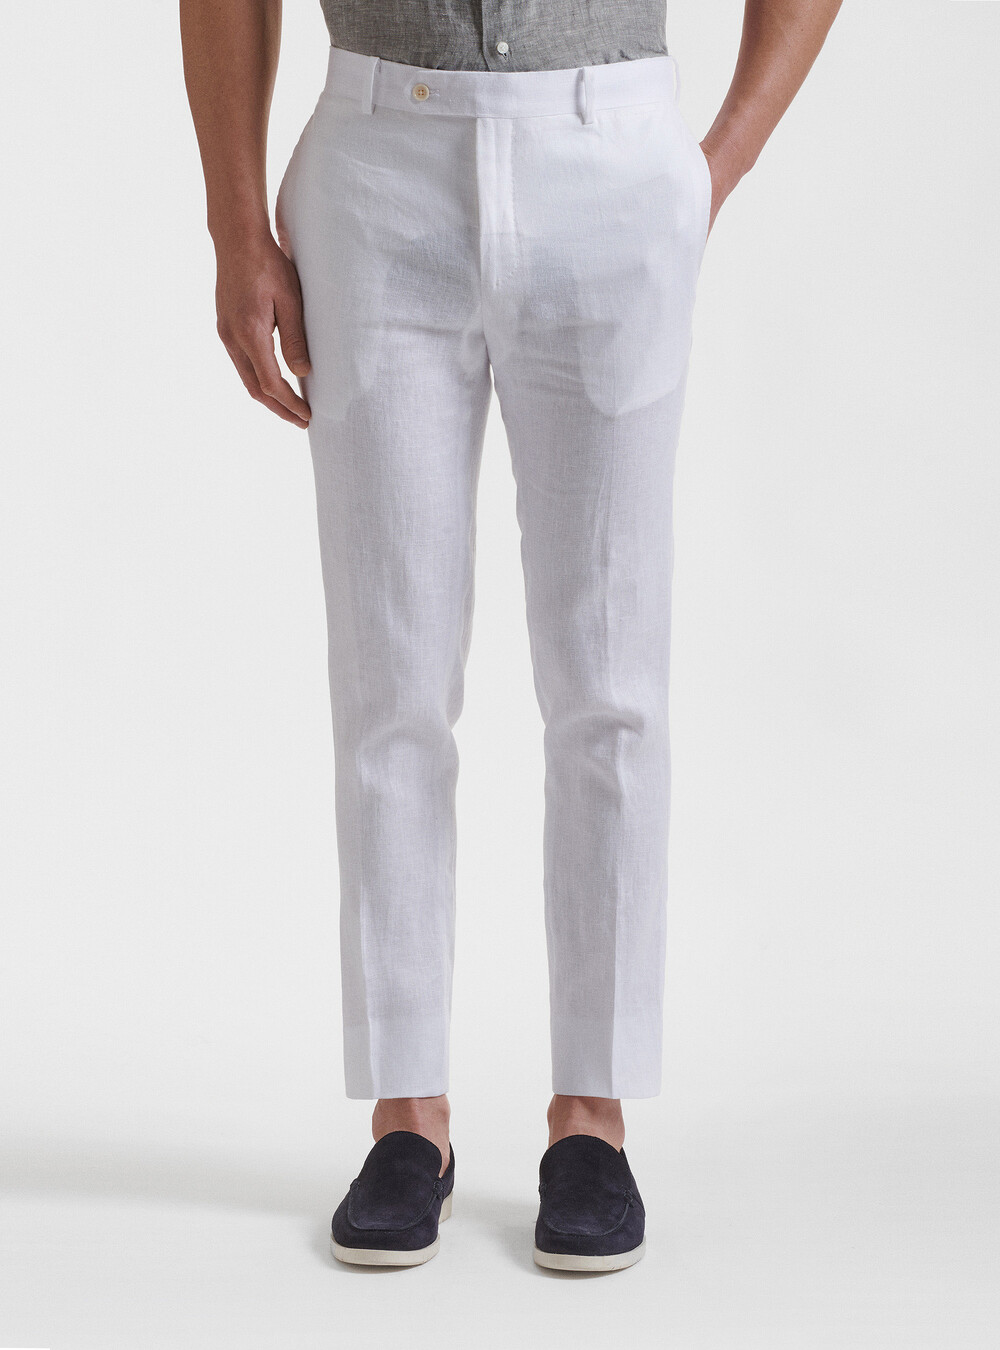 Pure linen suit trousers | GutteridgeEU | Suits Uomo